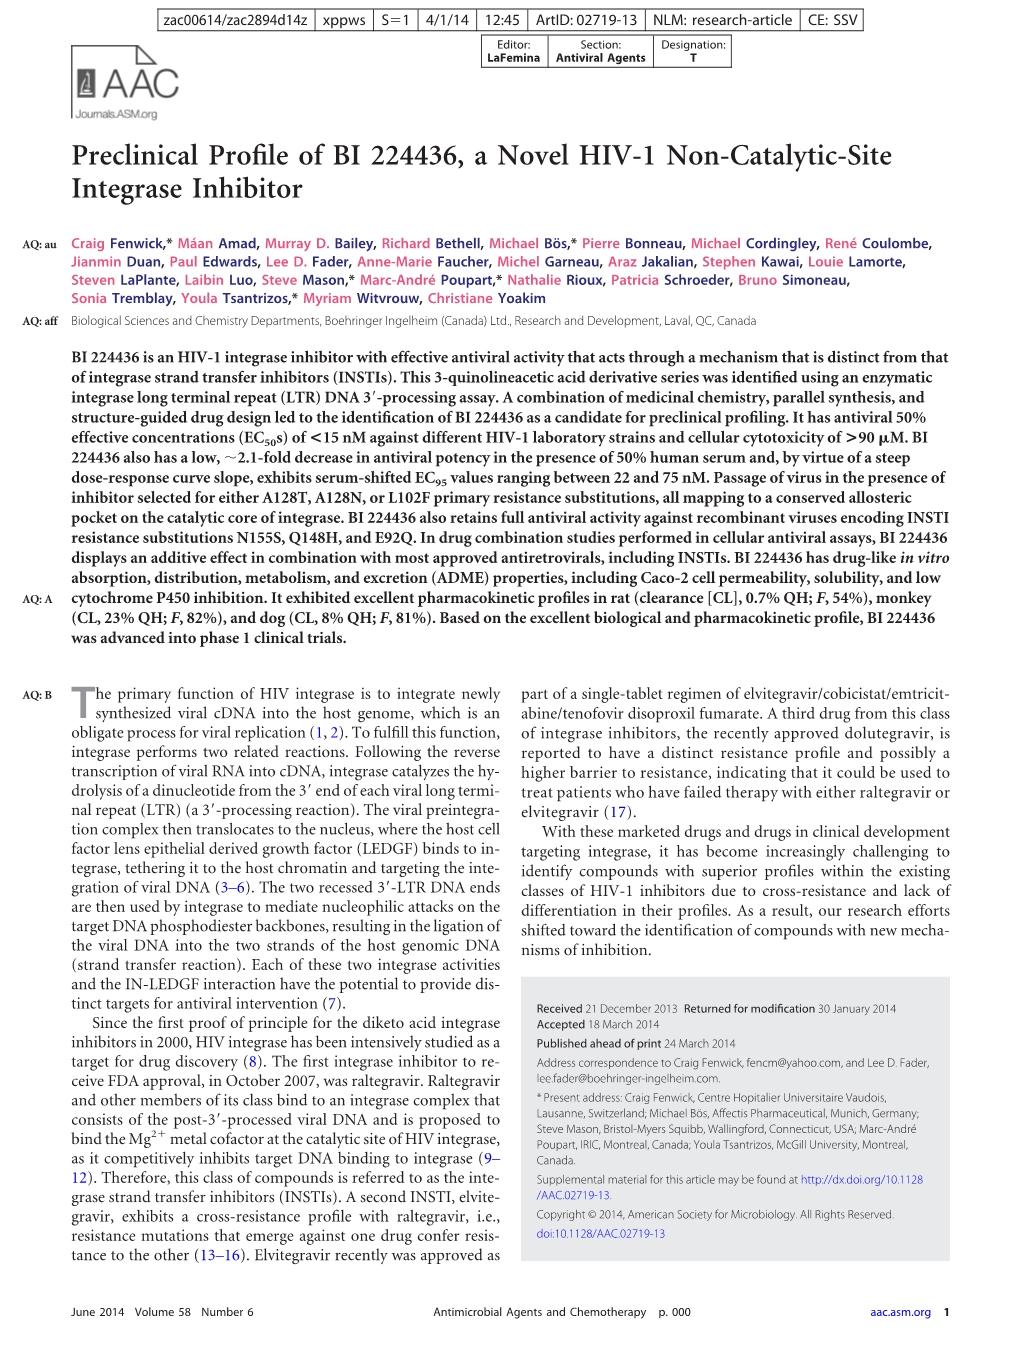 Preclinical Profile of BI 224436, a Novel HIV-1 Non-Catalytic-Site Integrase Inhibitor